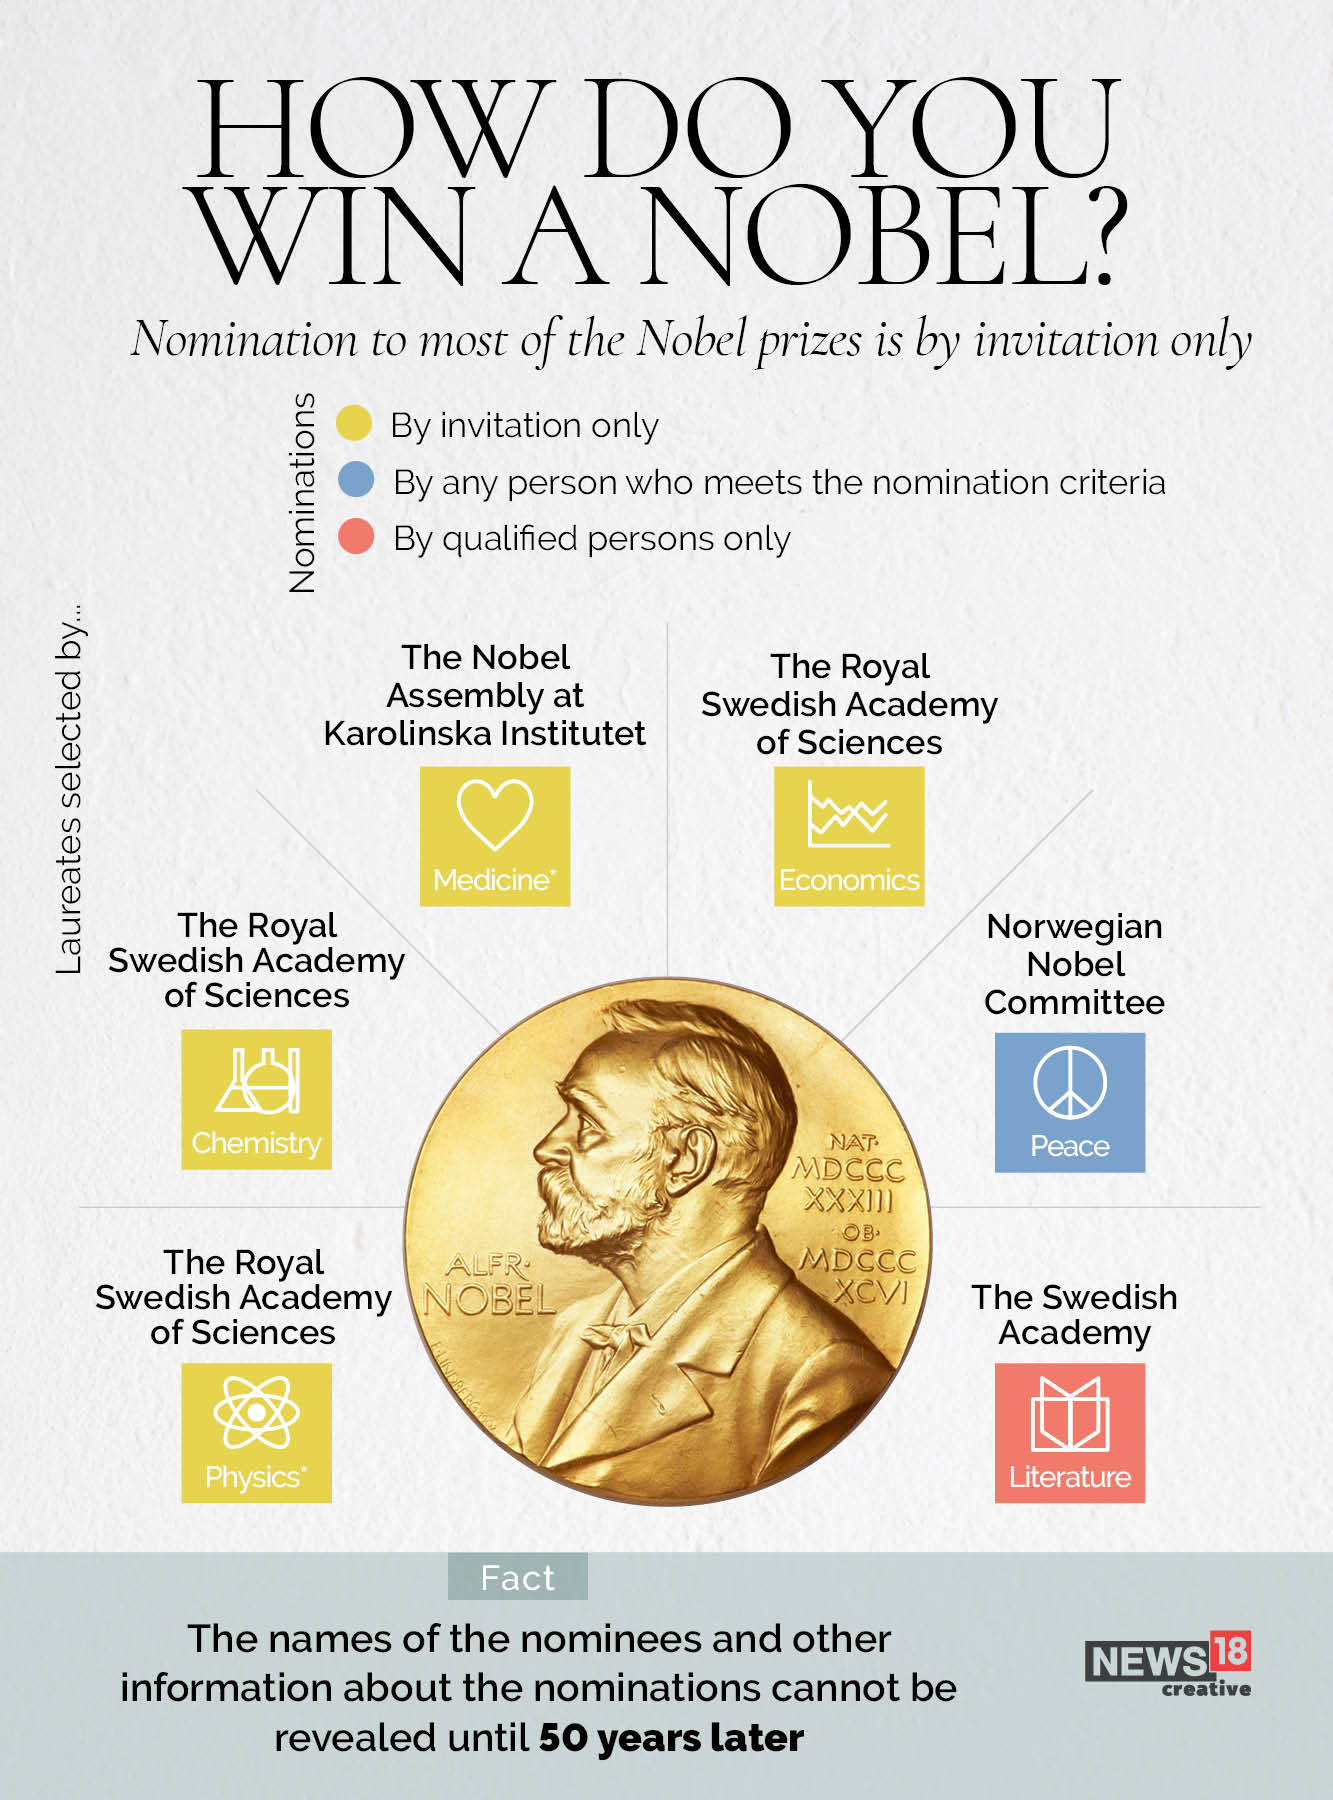 nobel prize winners essay